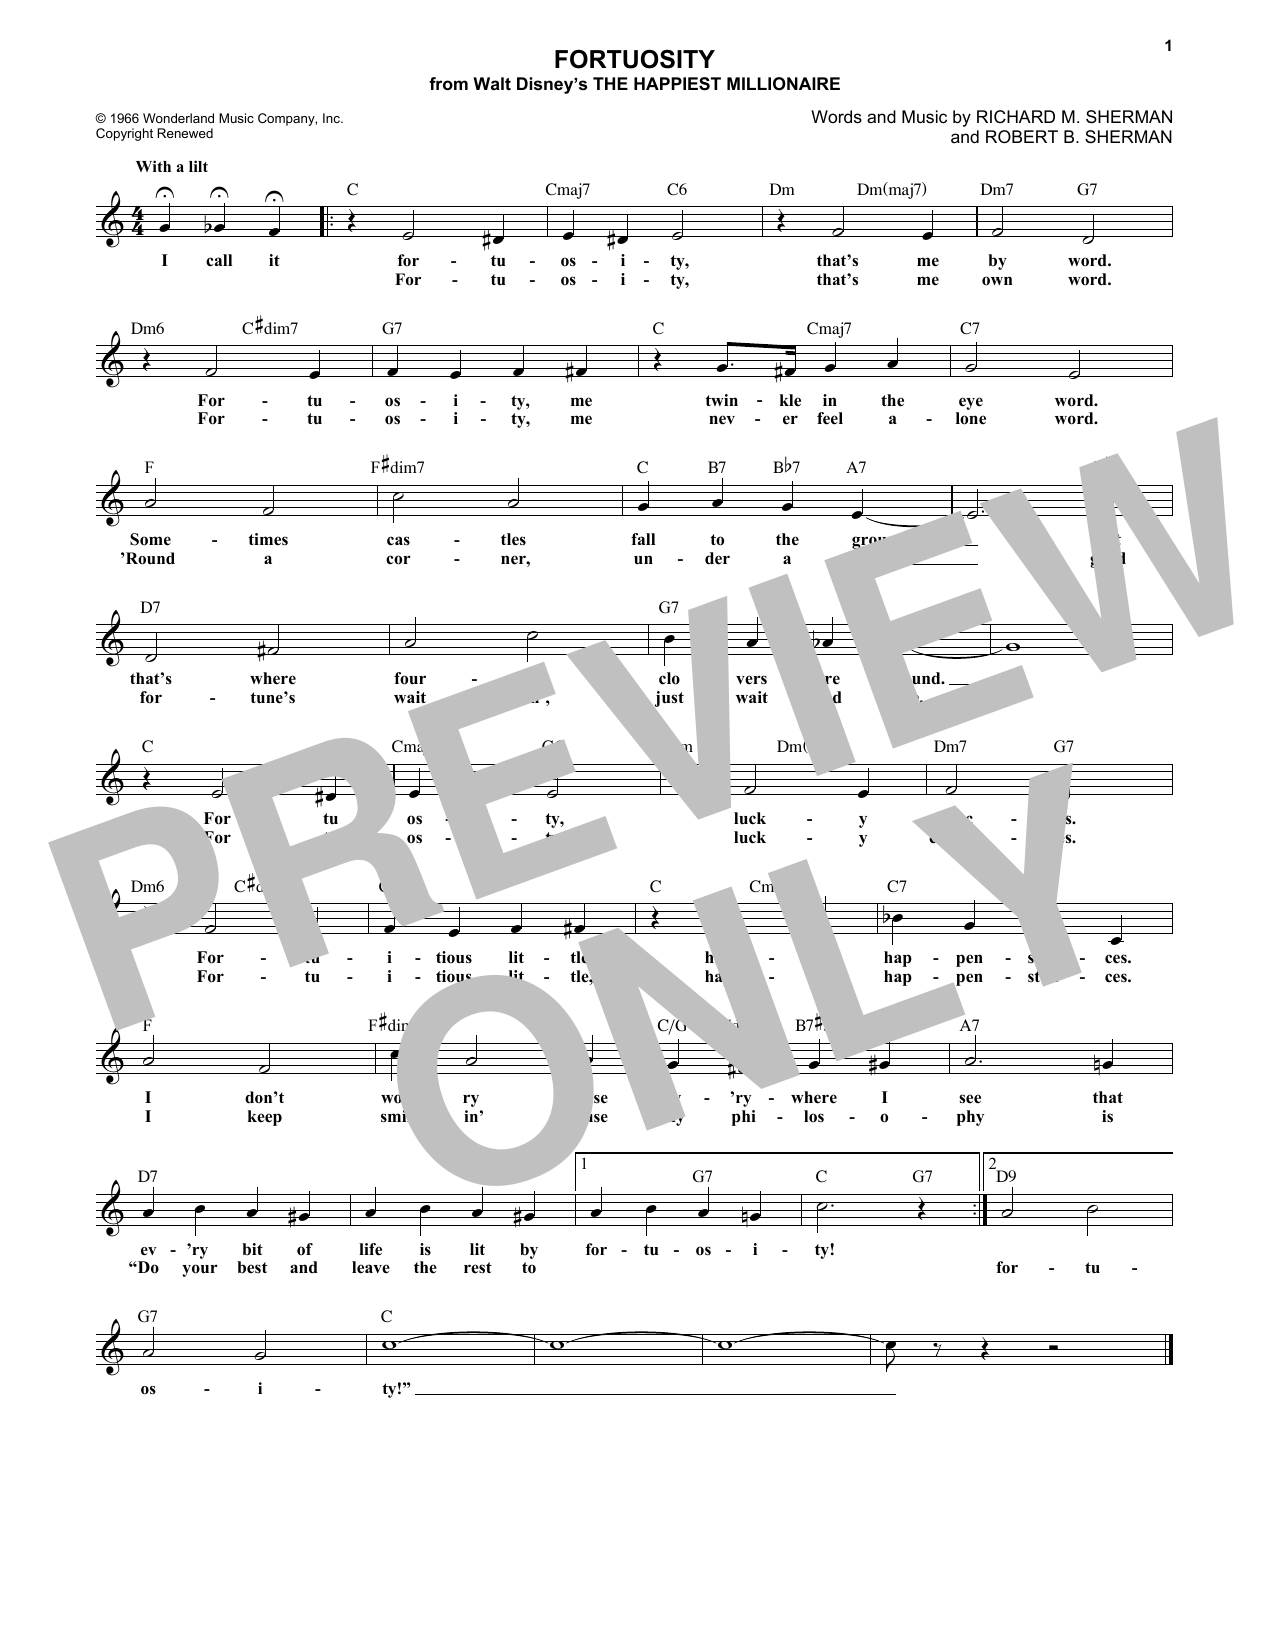 Richard M. Sherman Fortuosity Sheet Music Notes & Chords for Melody Line, Lyrics & Chords - Download or Print PDF